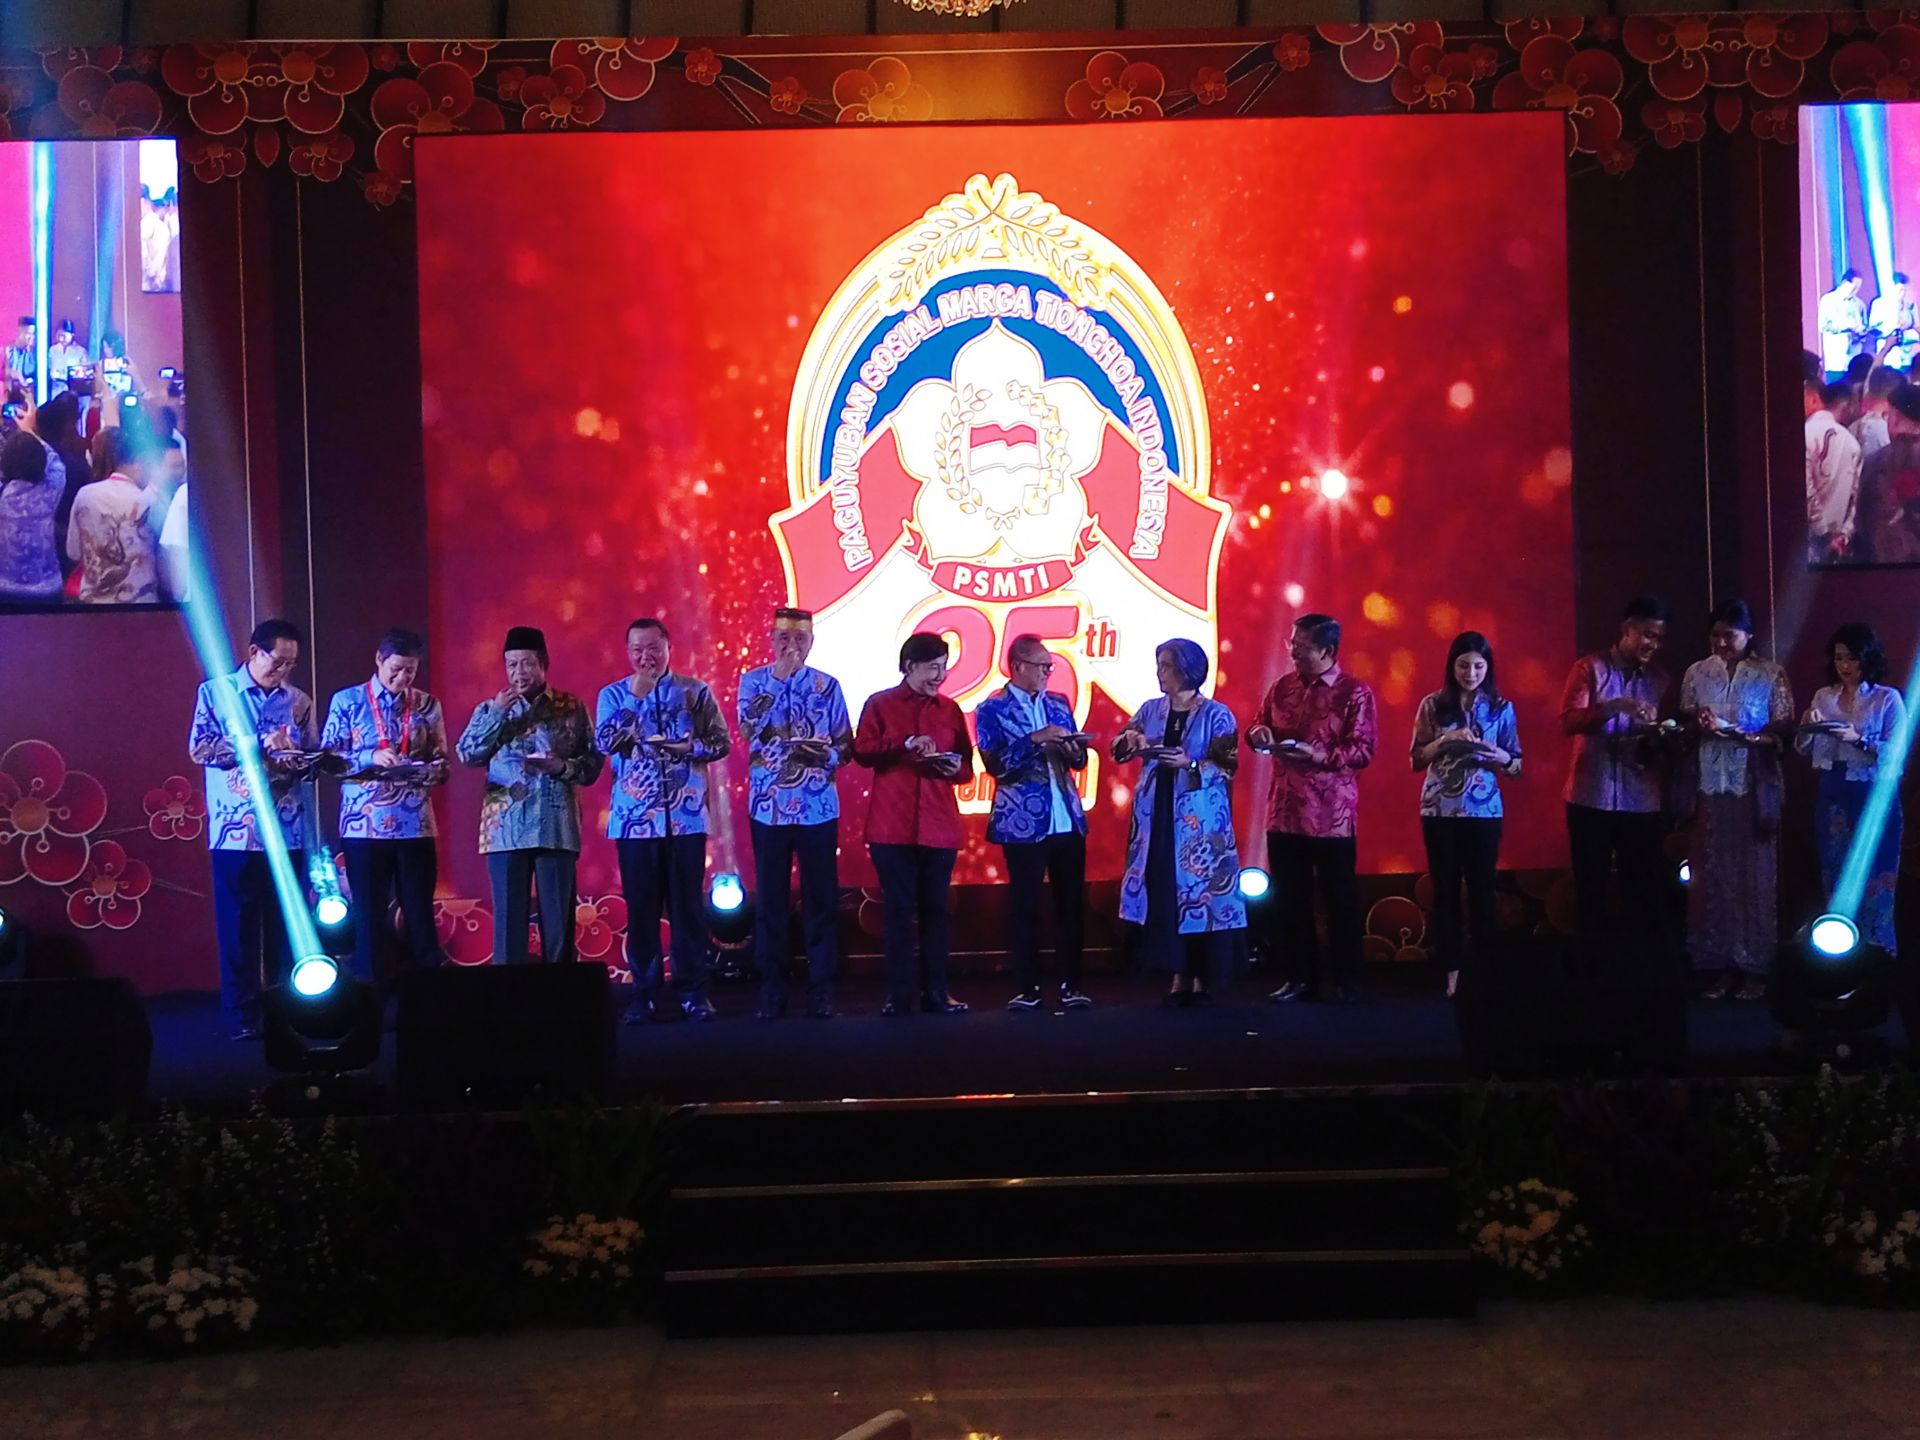 Perayaan HUT ke-25 PSMTI di TMII, Ketum Wilianto Tanta: PSMTI akan Fokus di Dunia Pendidikan!